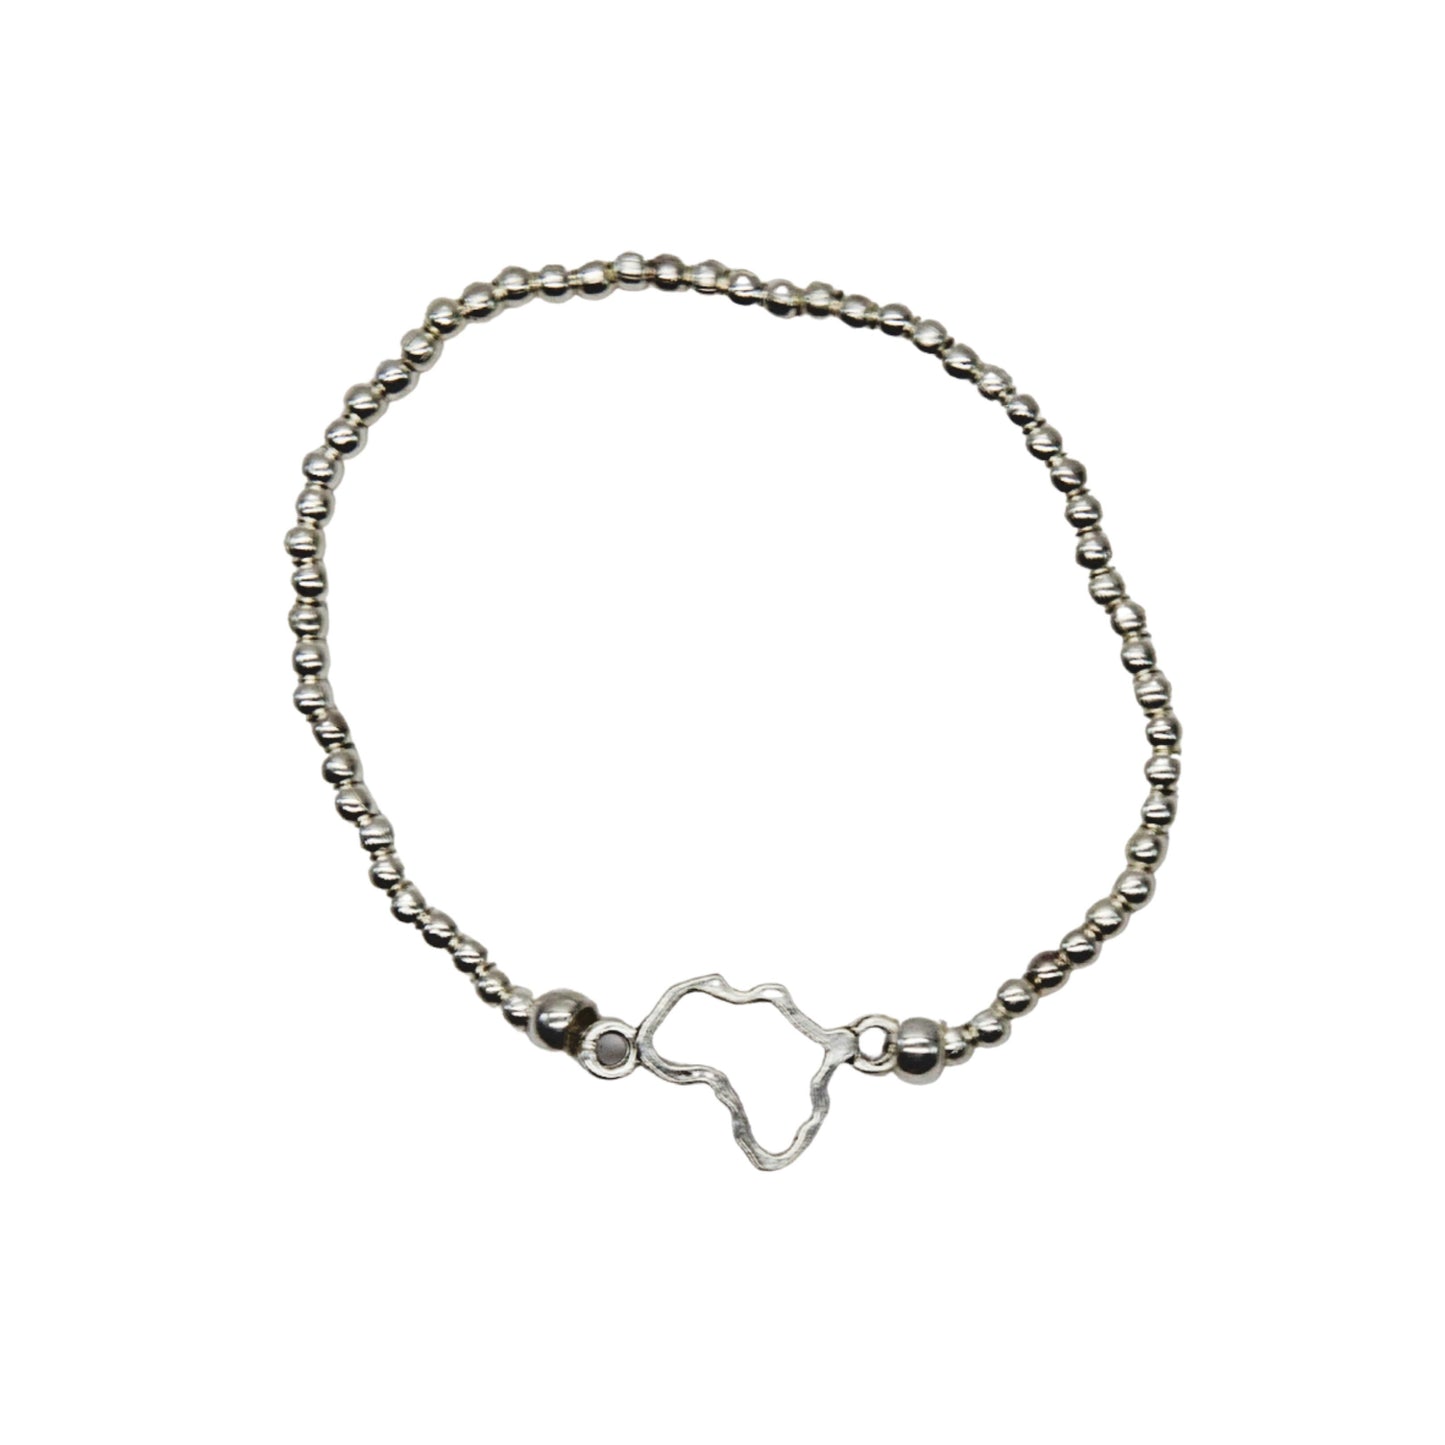 Africa Outline Stretch Bracelet - Silver Metal Beads